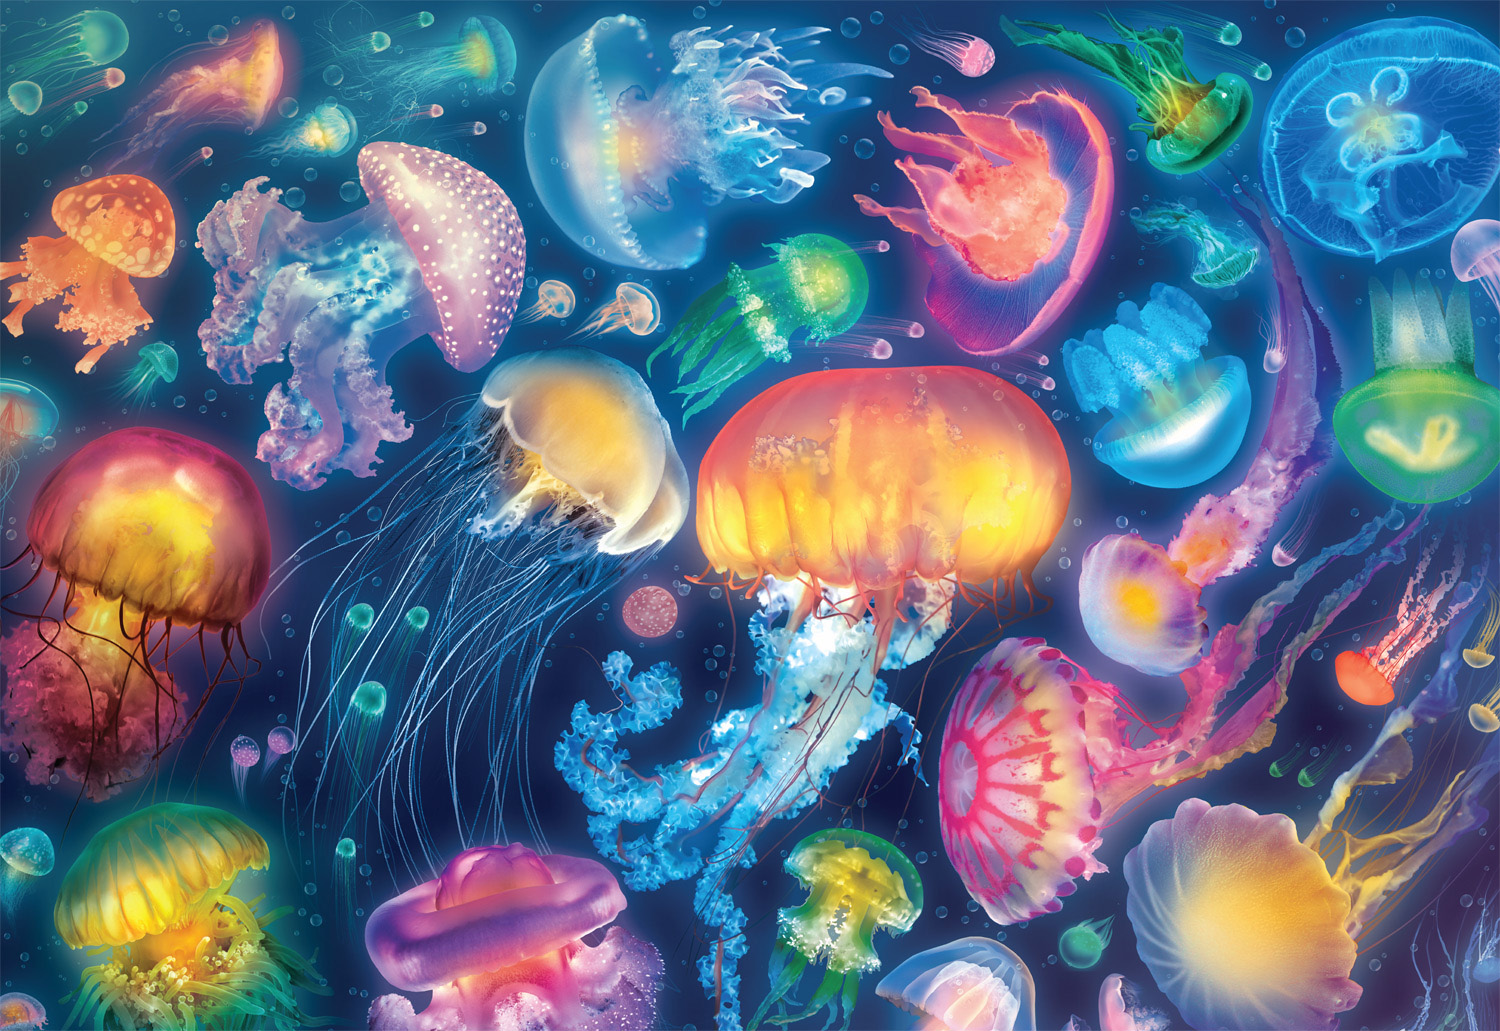 Jellyfish Fantasy Sea Life Jigsaw Puzzle